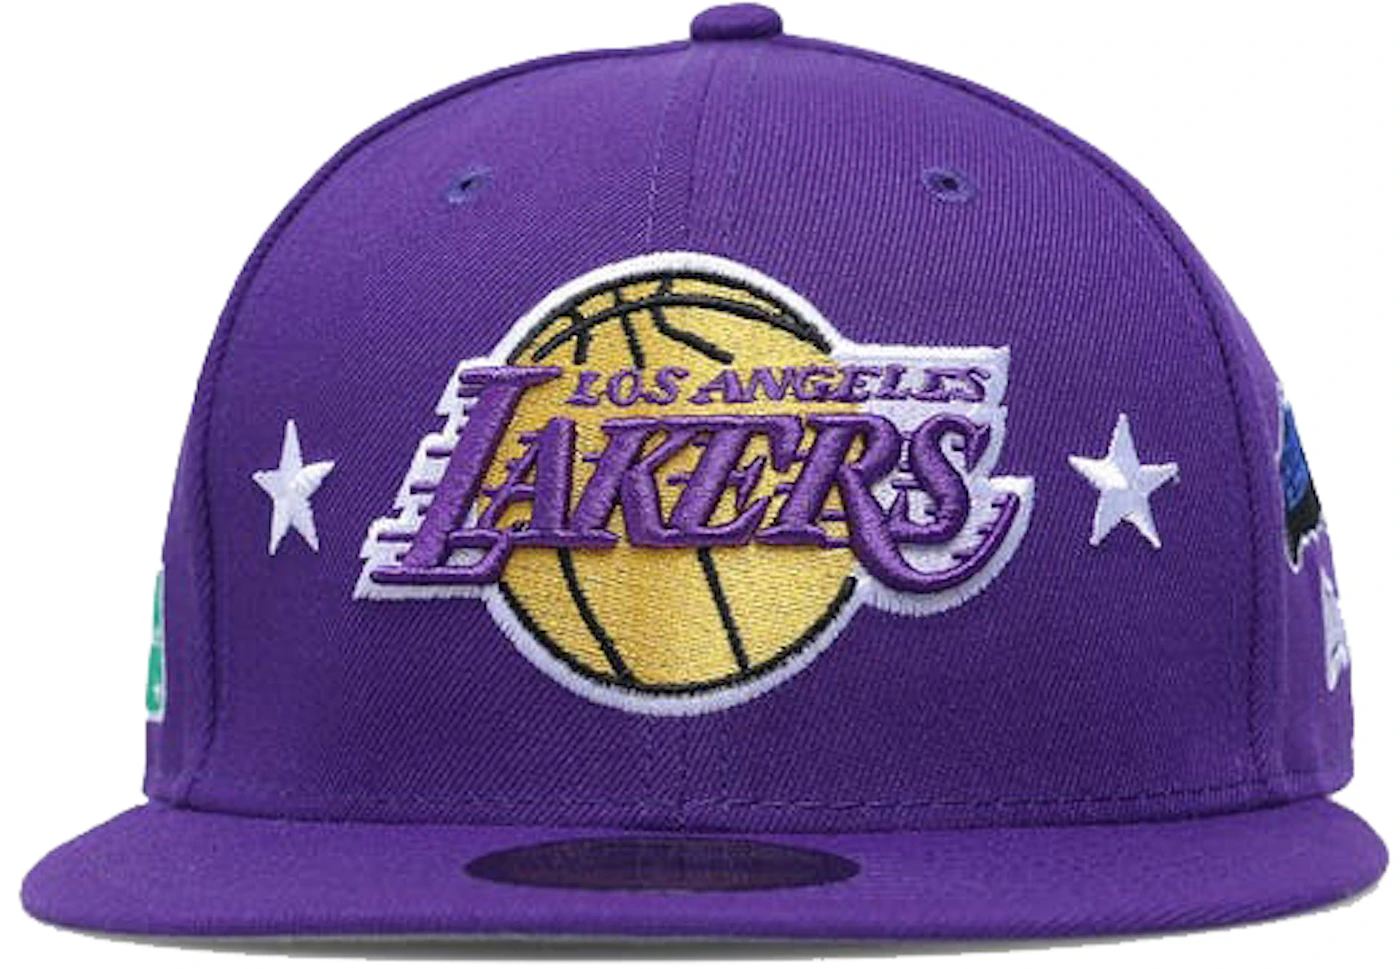 New Era LA Lakers tracksuit in black